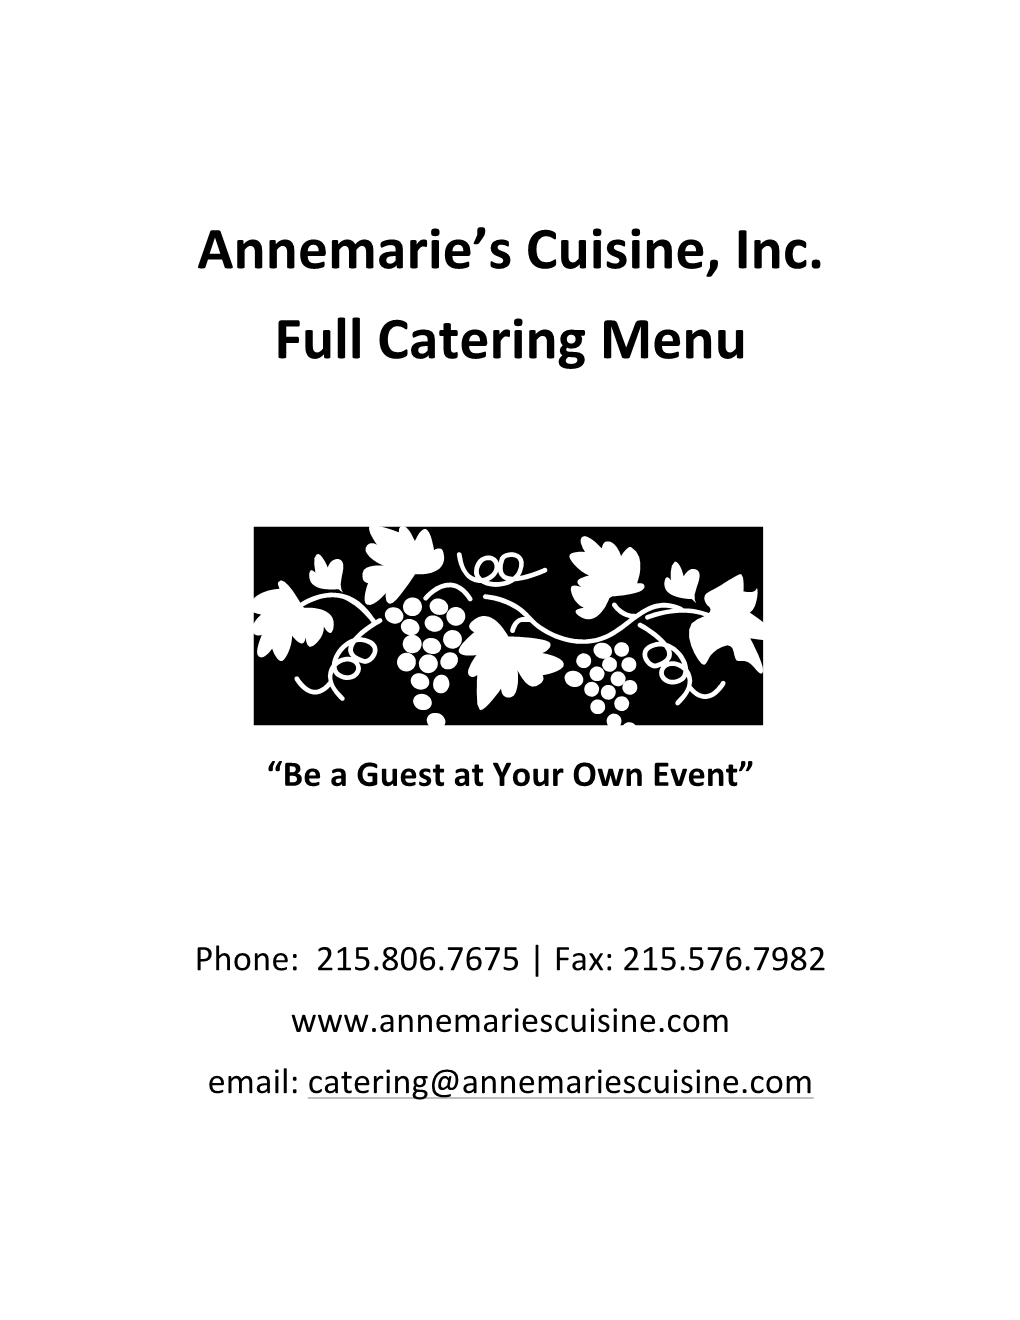 Annemarie's Cuisine, Inc. Full Catering Menu